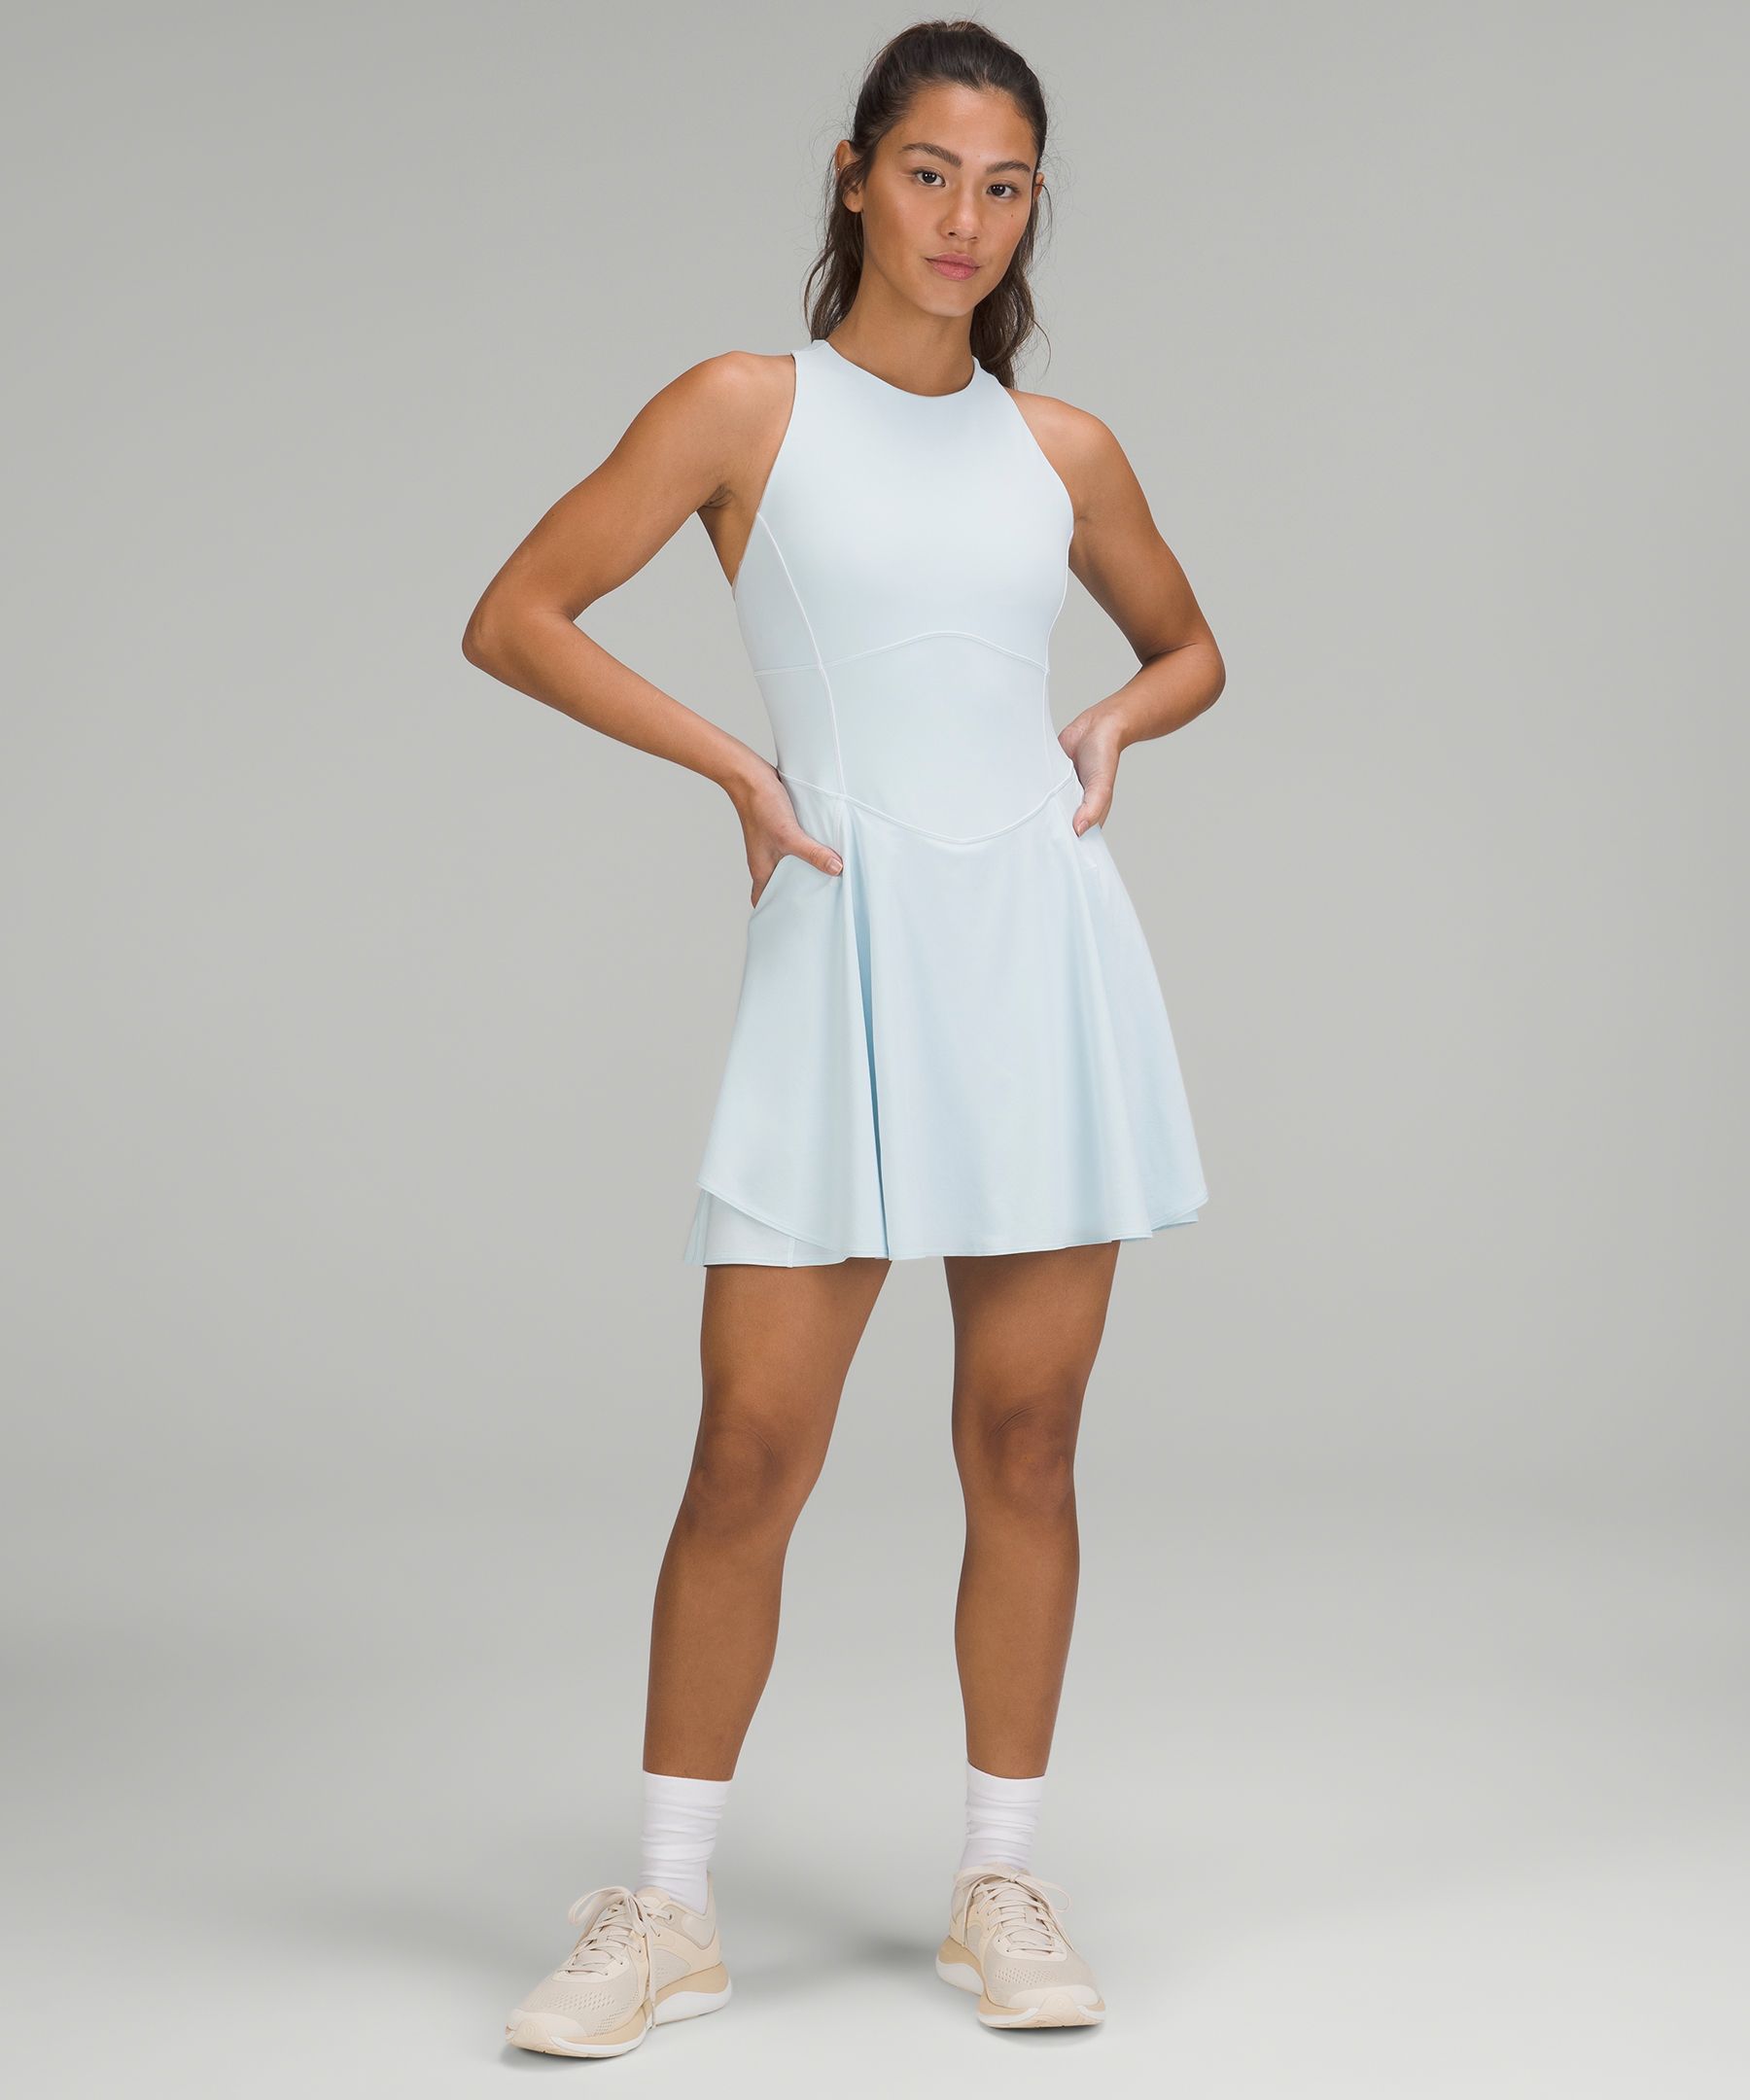 Lululemon Swiftly Tech Cross Back Tennis Dress Women's Size 10 White